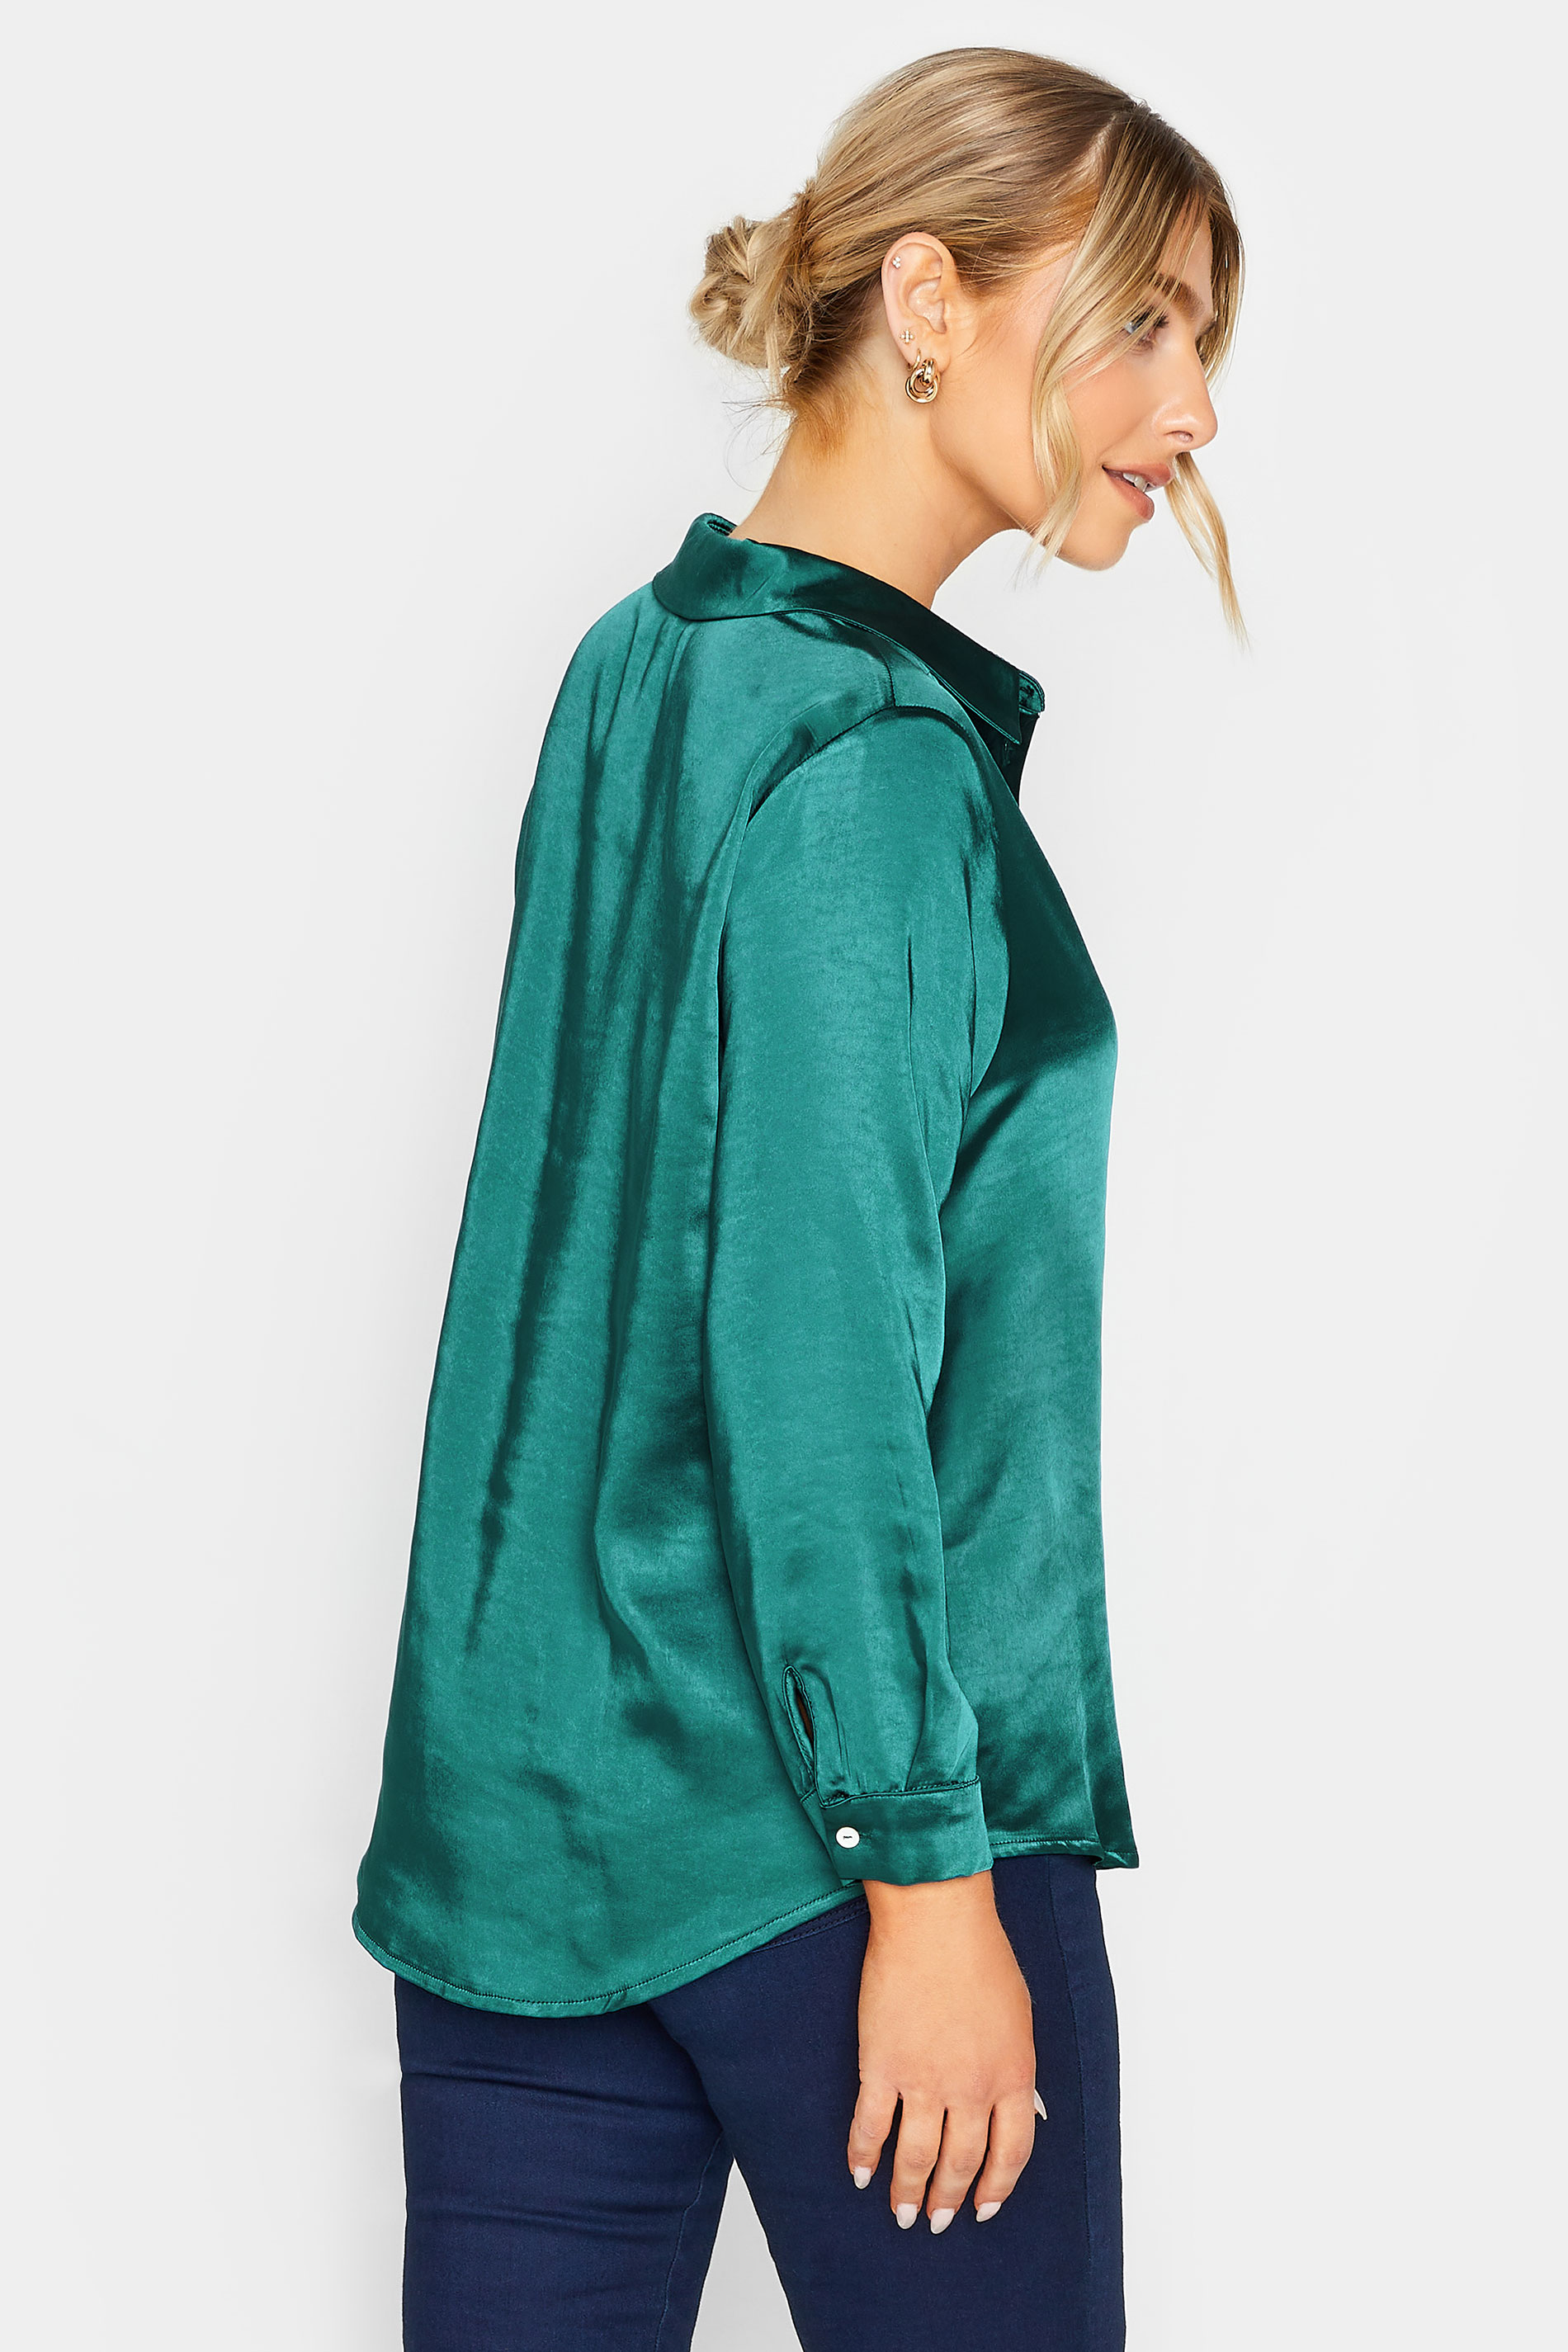 M&Co Emerald Green Satin Shirt | M&Co 3